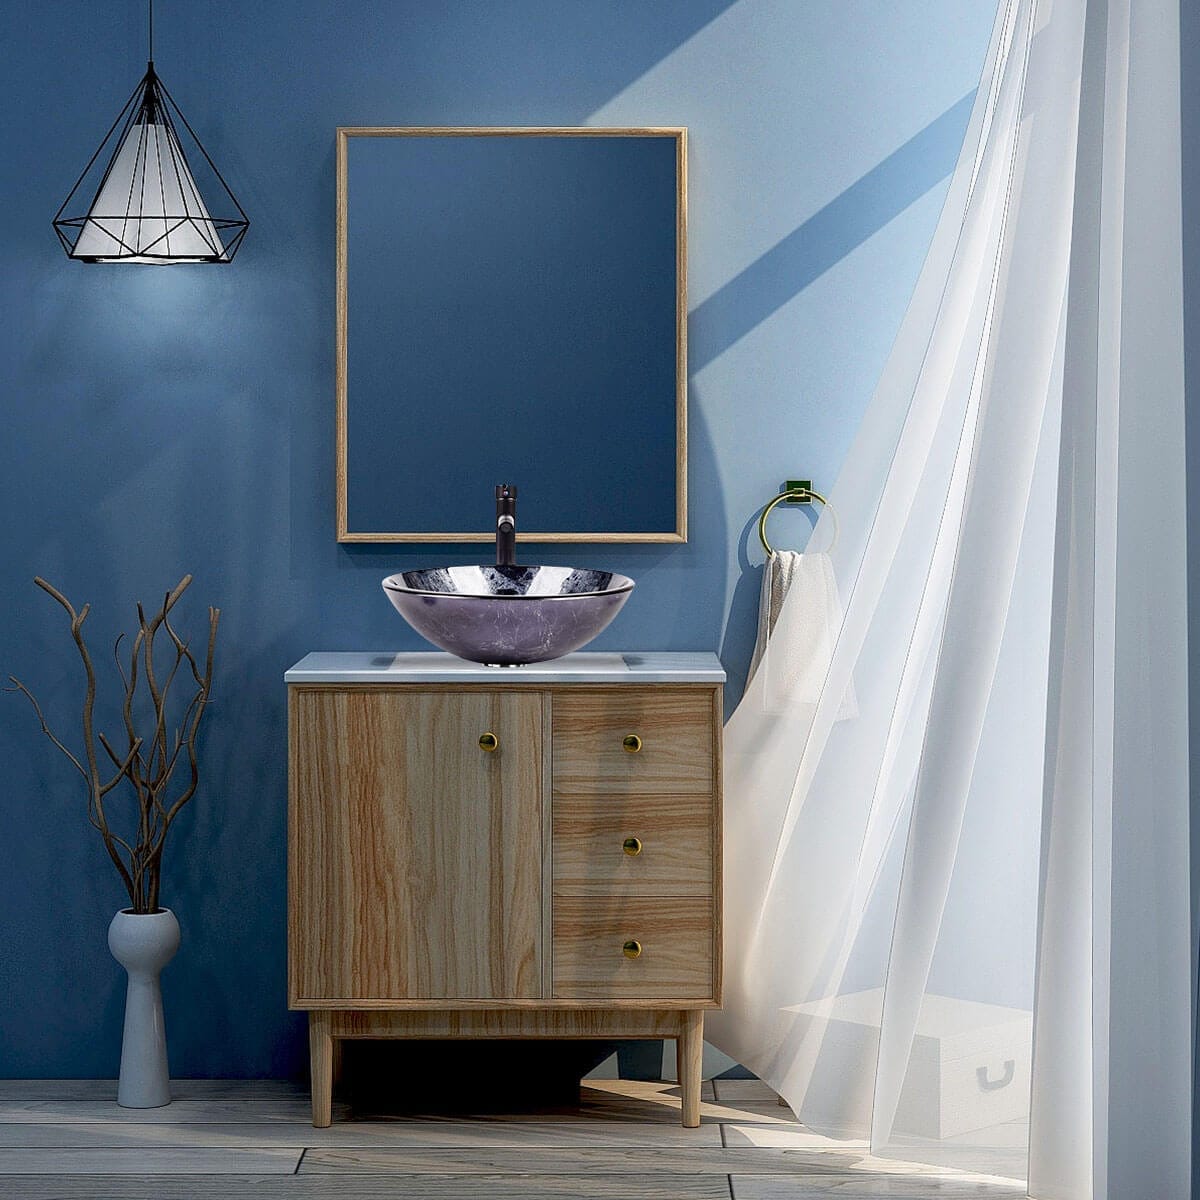 Elecwish Vessel Sinks Glass Bathroom Vessel Sink 16.5" BG1002 with vanity display scene